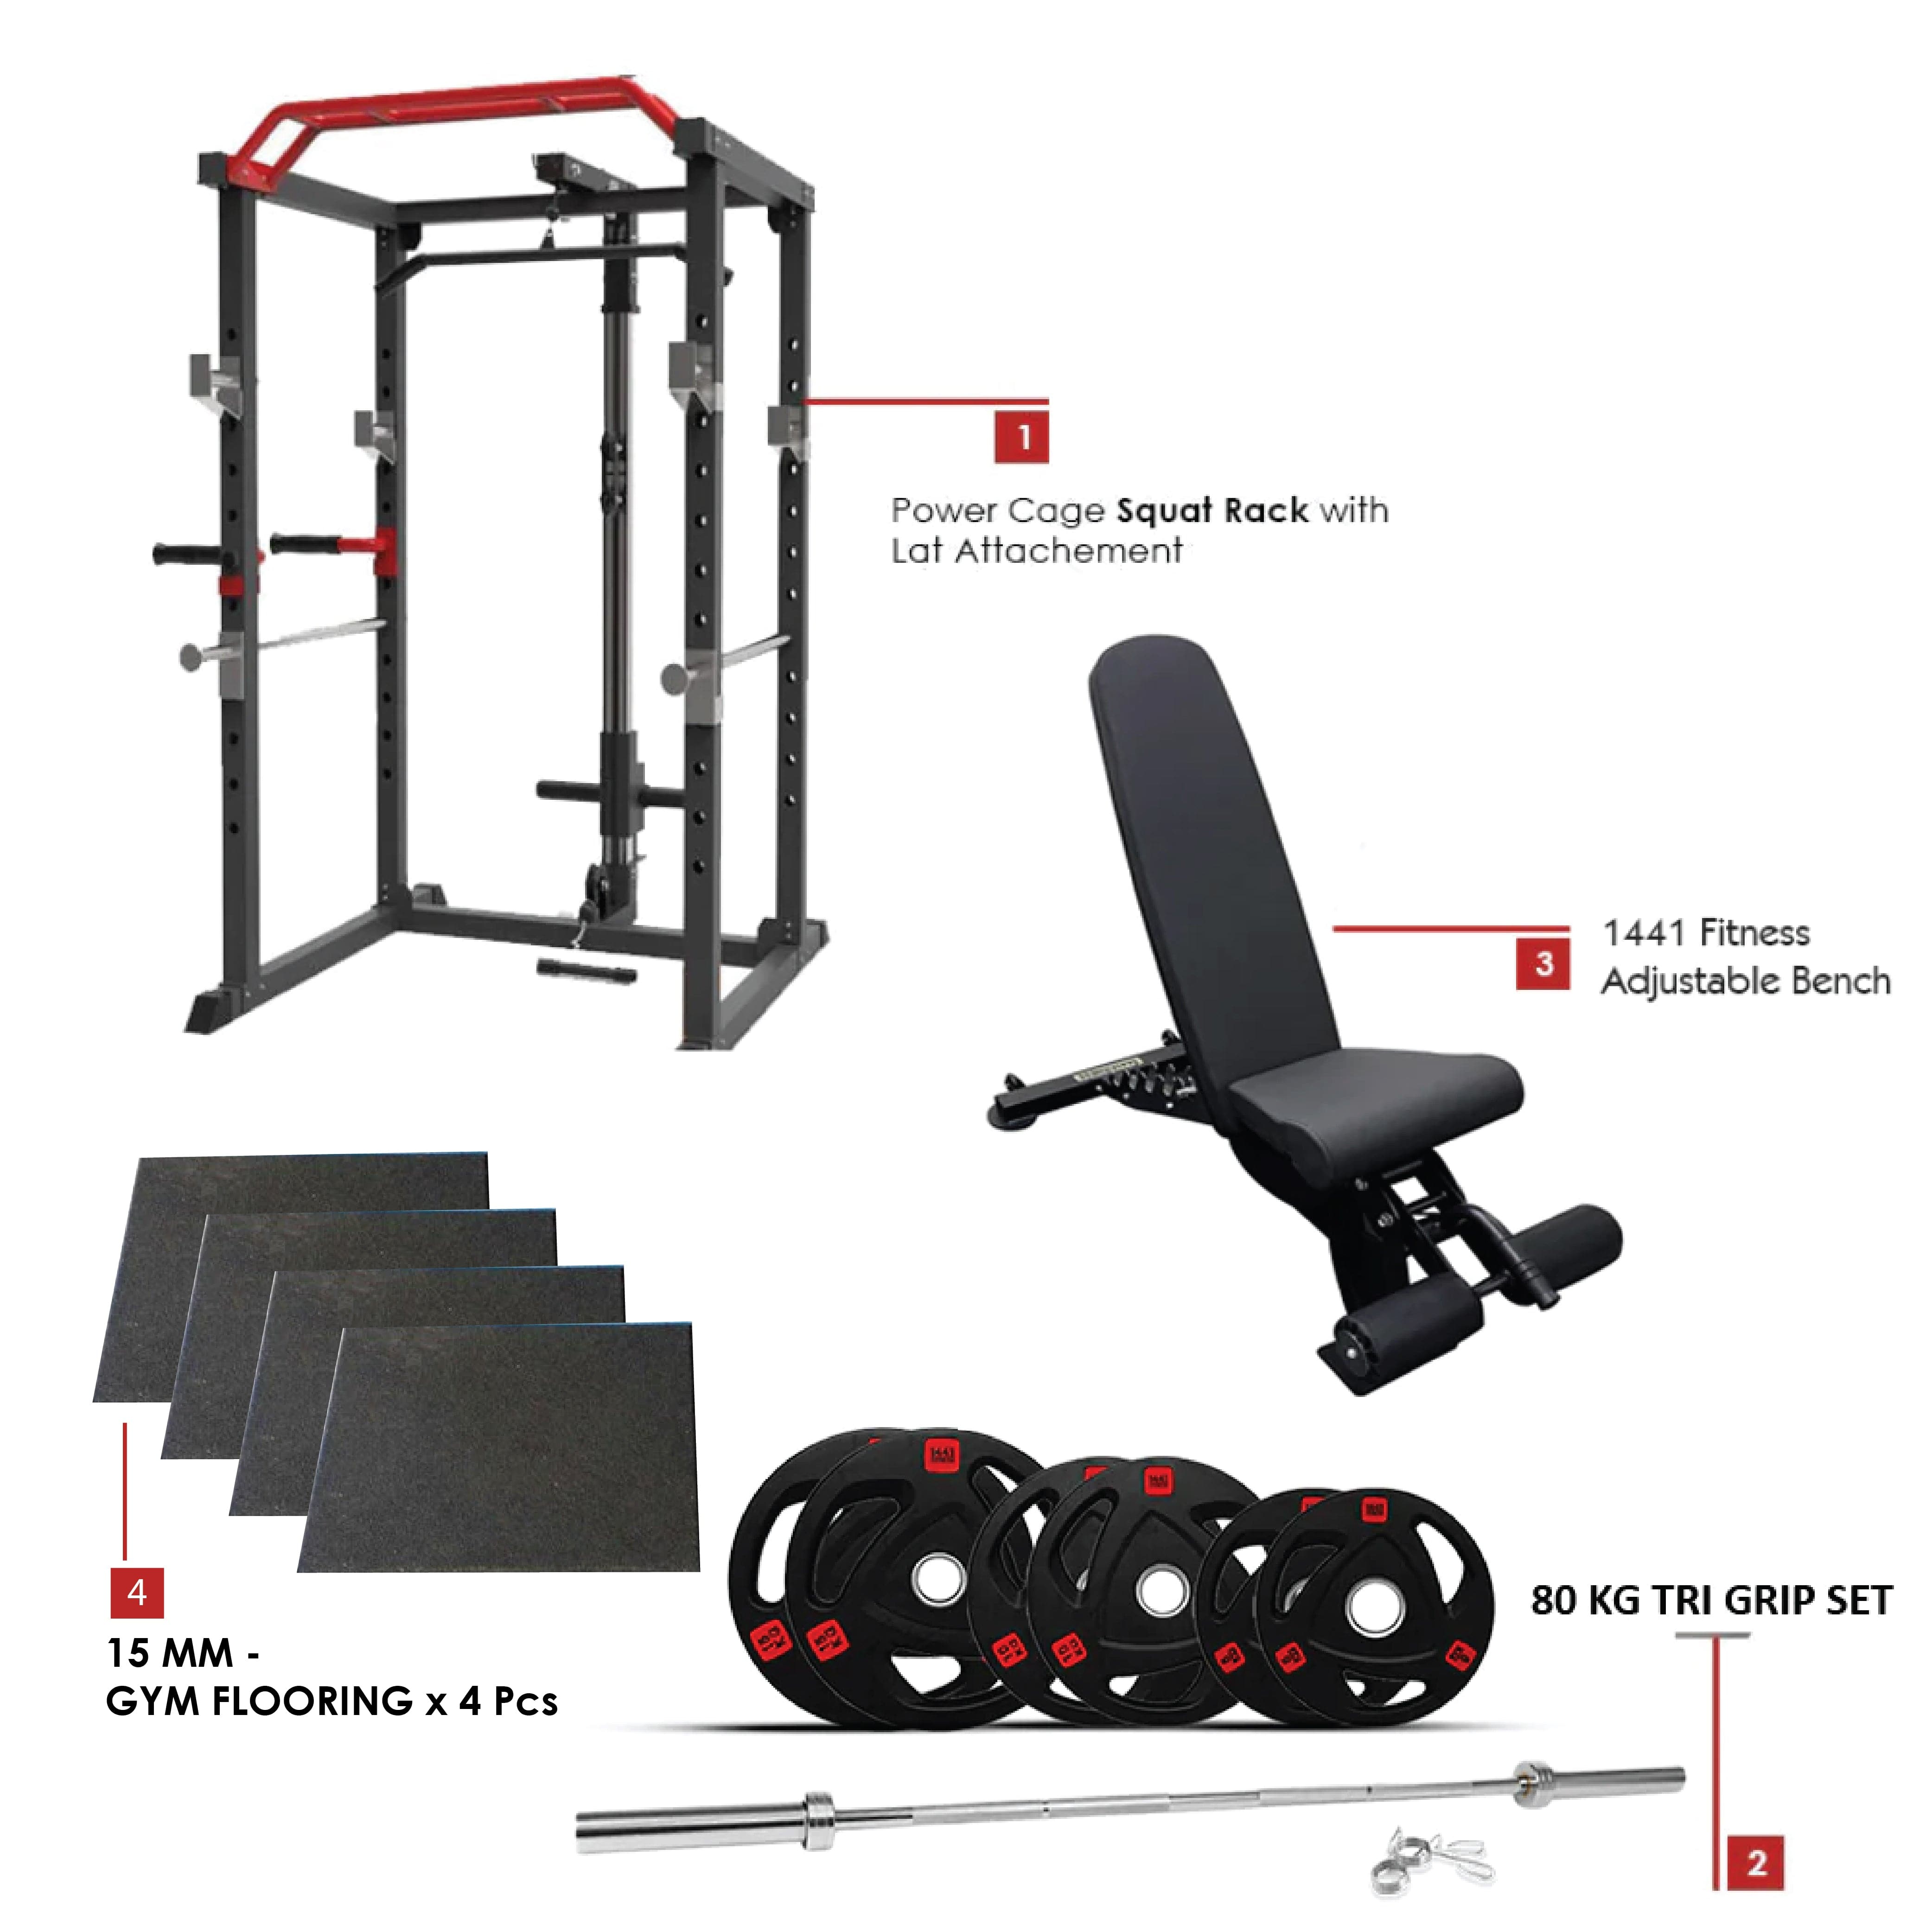 Combo Offer | Power Cage Squat Rack J008 +7 Ft Bar With Tri Grip 80 KG Set + Adjustable Bench A8007 + 4 X 15 Mm Flooring - Athletix.ae